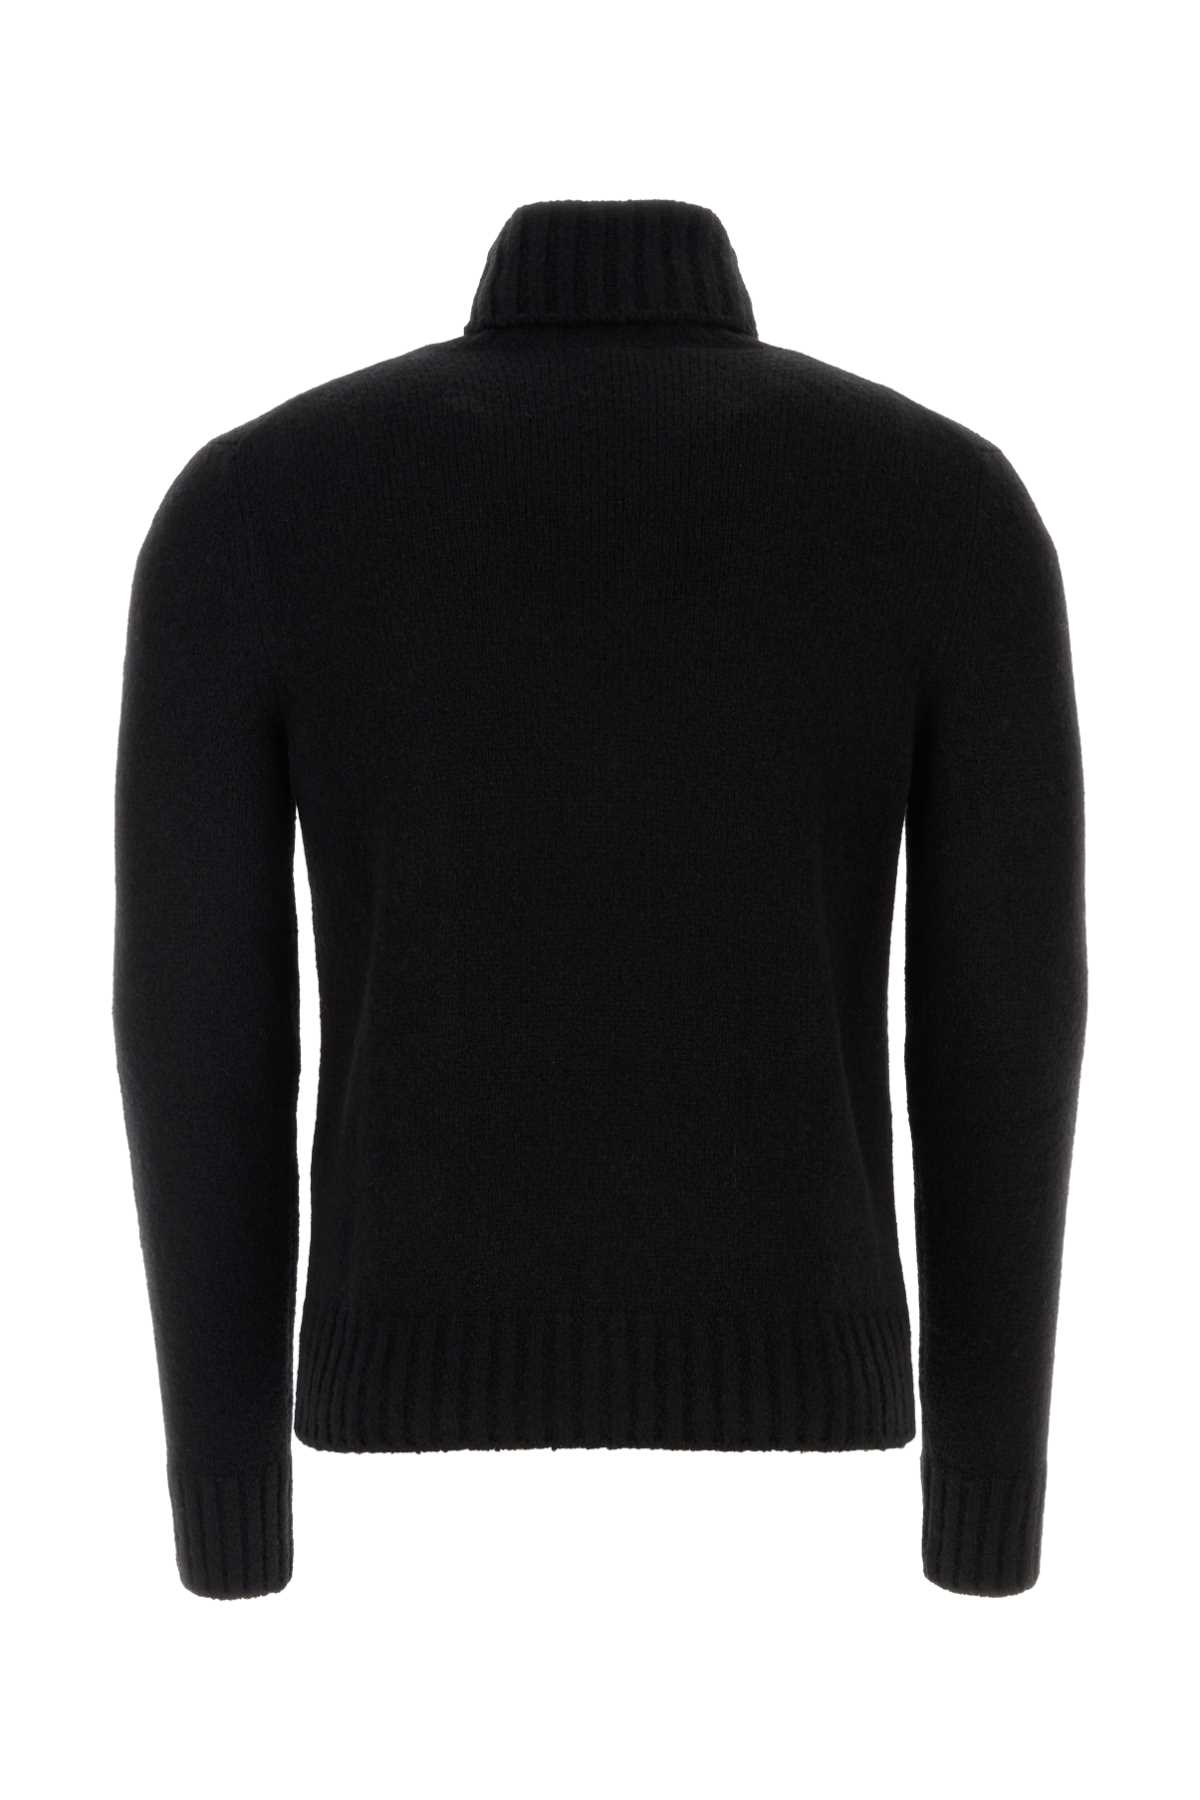 Tom Ford Black Cashmere Blend Sweater